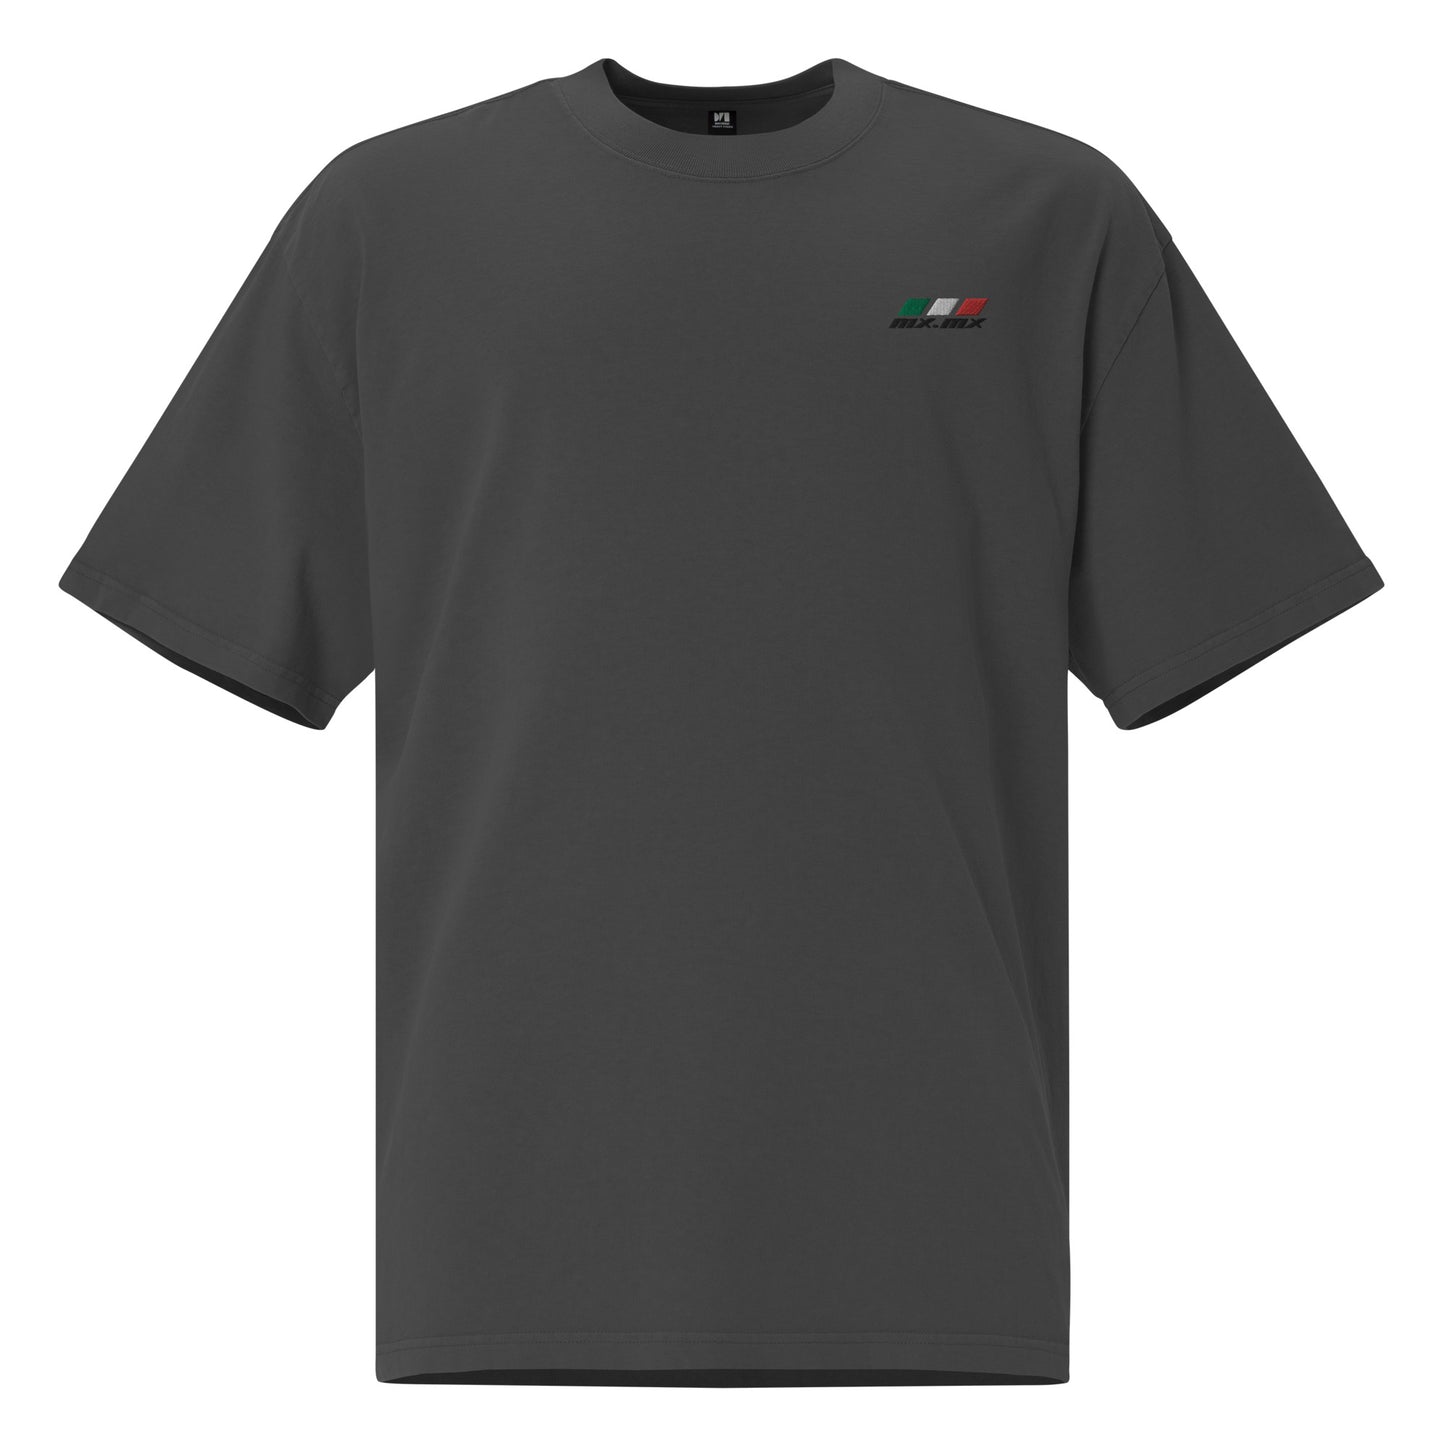 Camiseta oversize con efecto desgastado "mx.mx" logo bordado